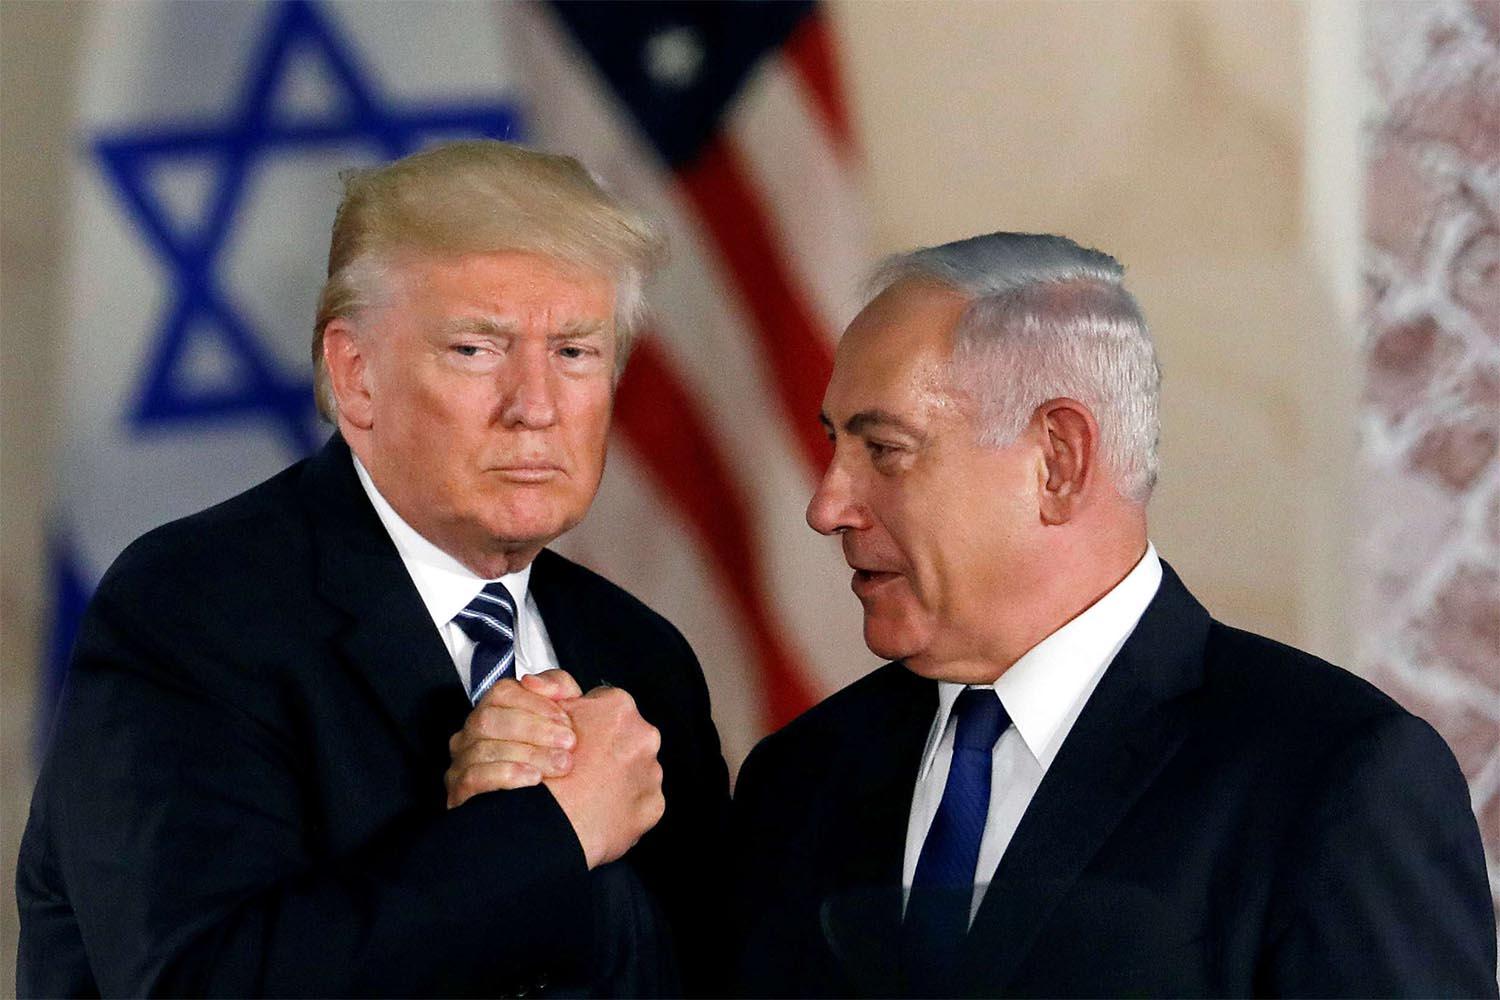 US President Donald Trump and Israeli Prime Minister Benjamin Netanyahu shake hands 